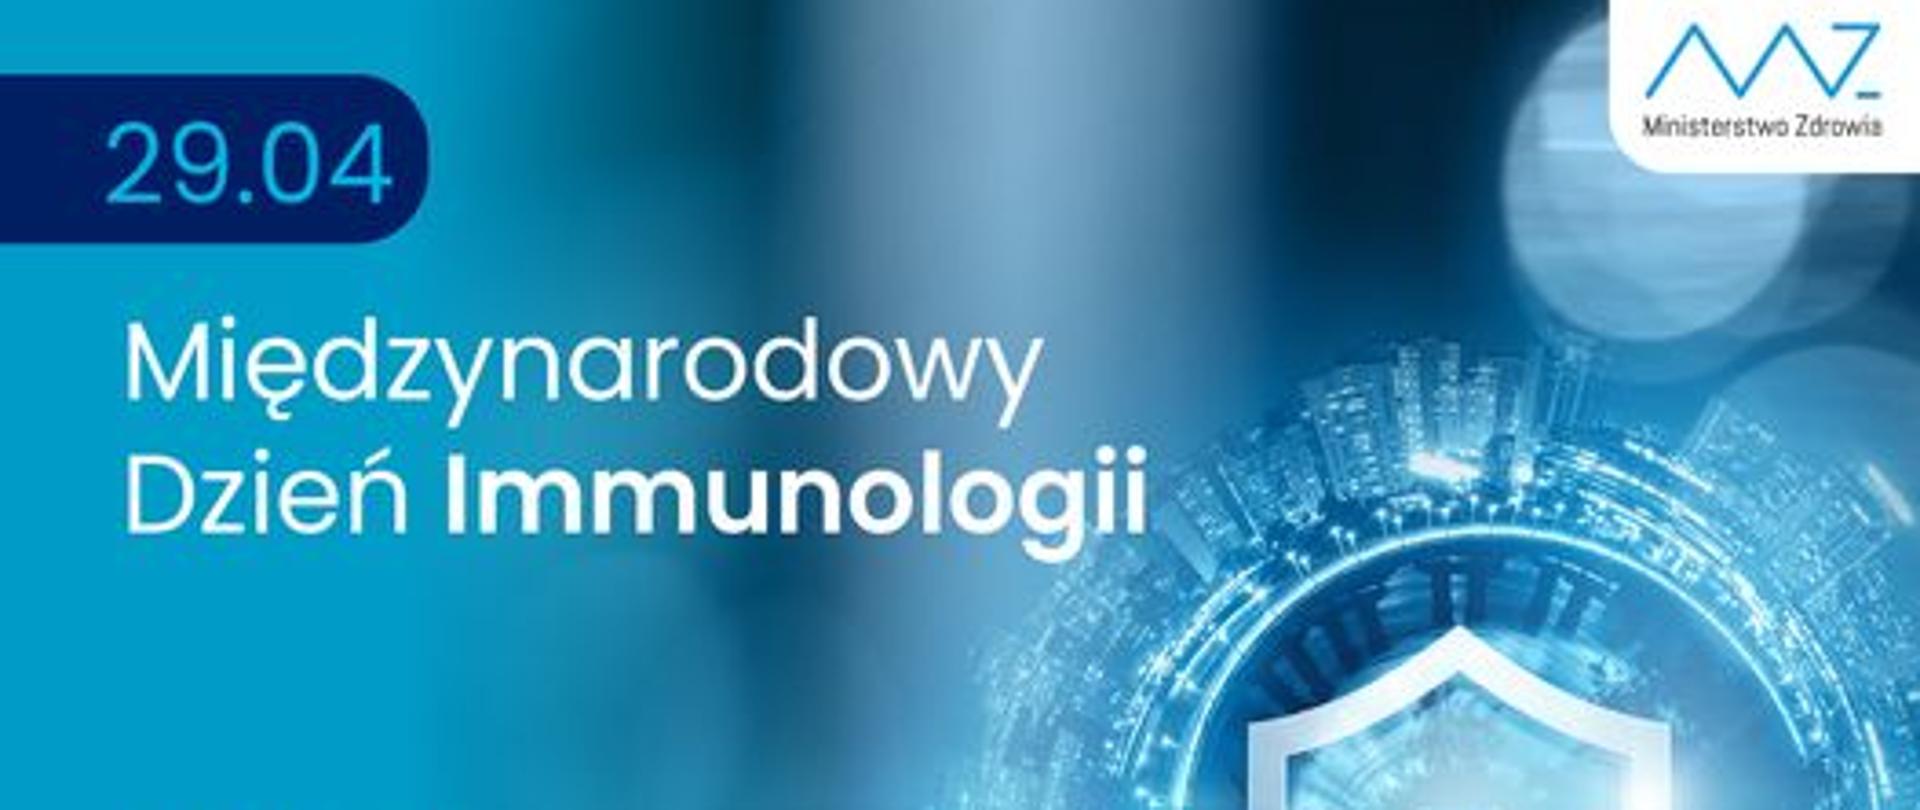 Dzień Immunologii